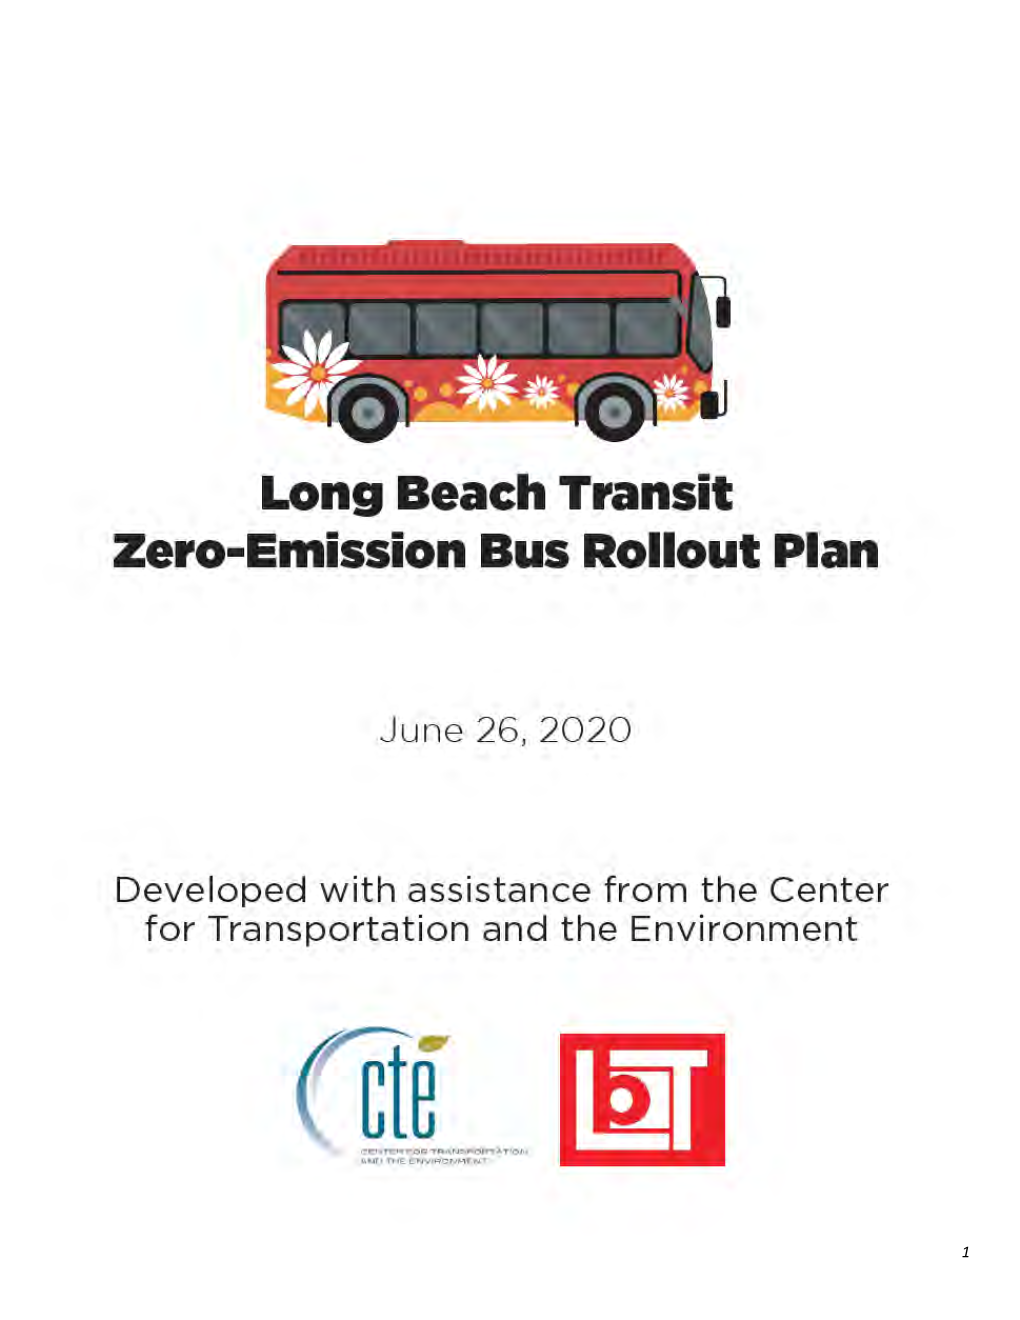 Long Beach Transit Zero-Emission Bus Rollout Plan